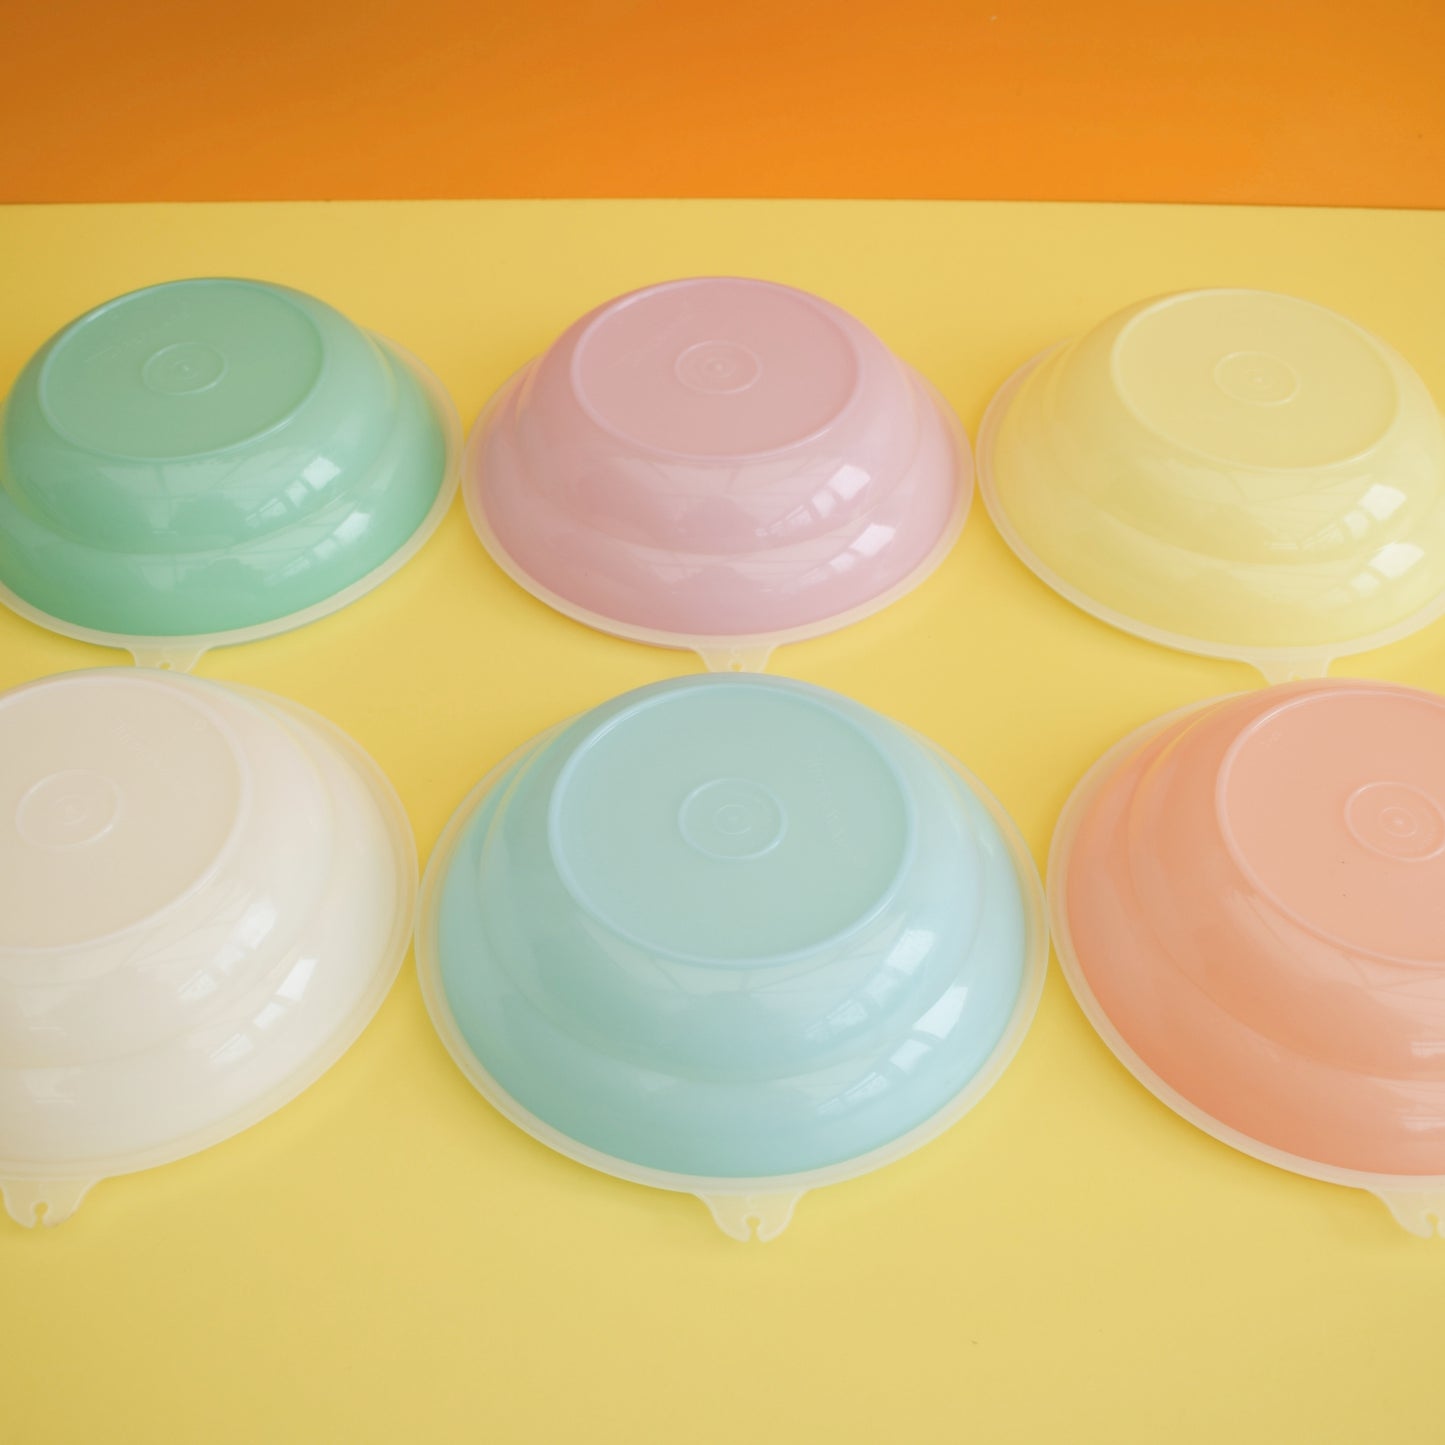 Vintage 1960s Tupperware Bowl Set - Pastel